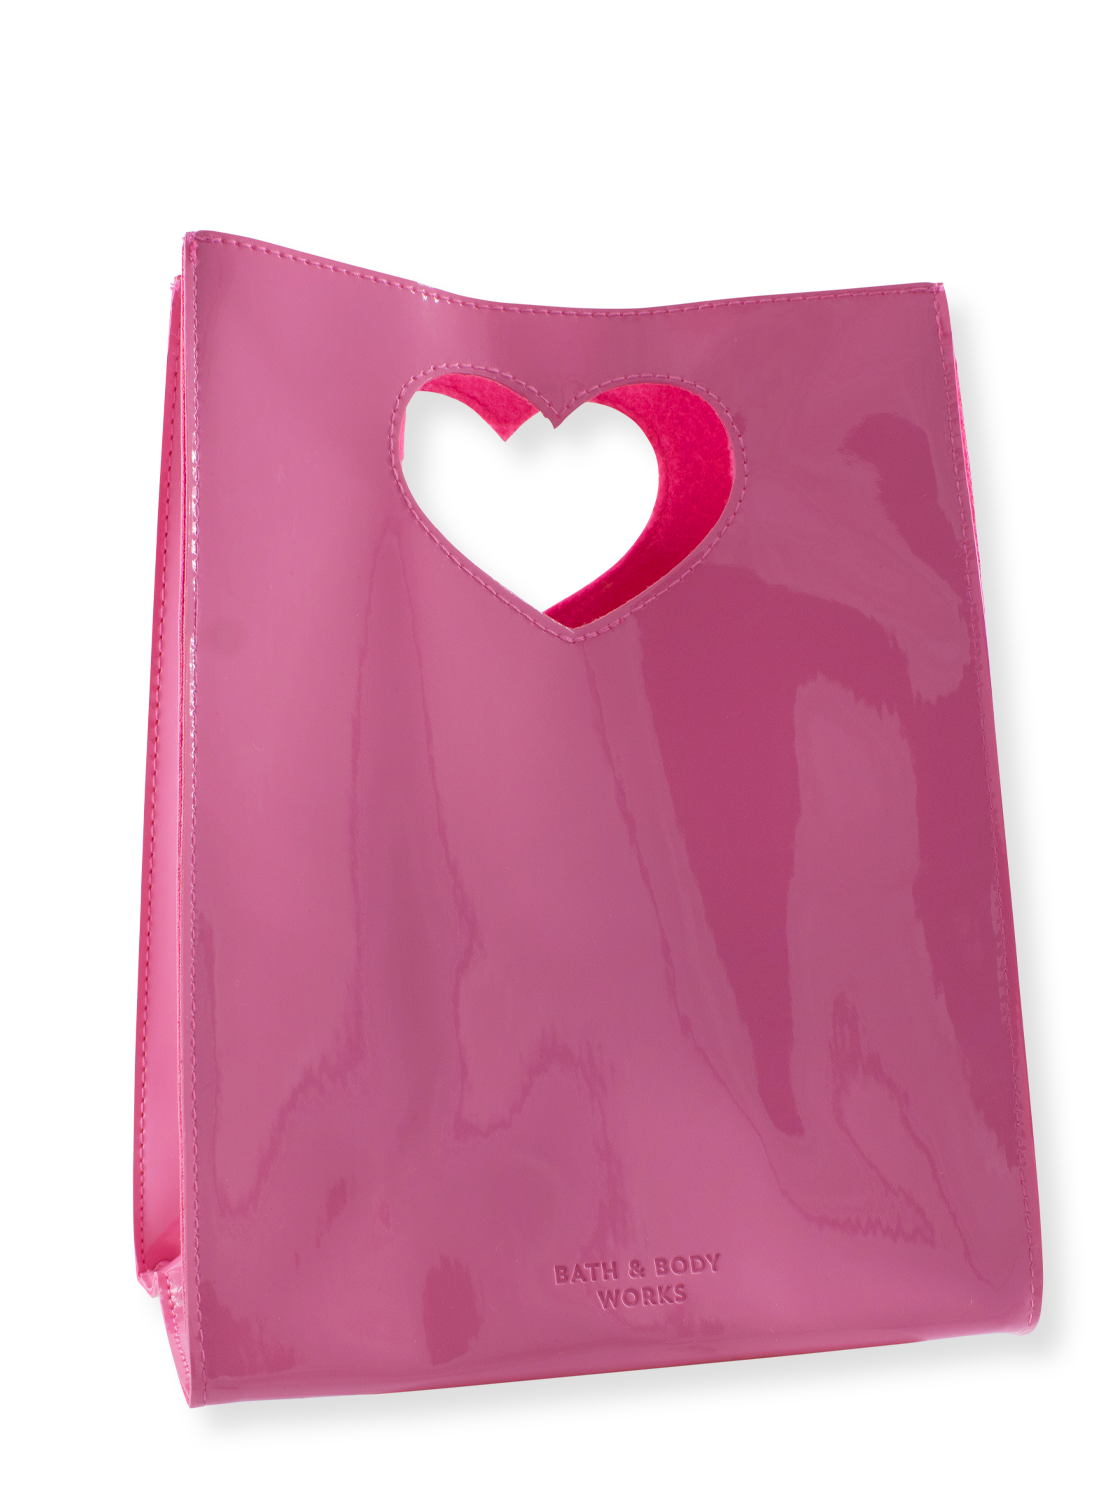 Gift bag - Valentine Heart - large